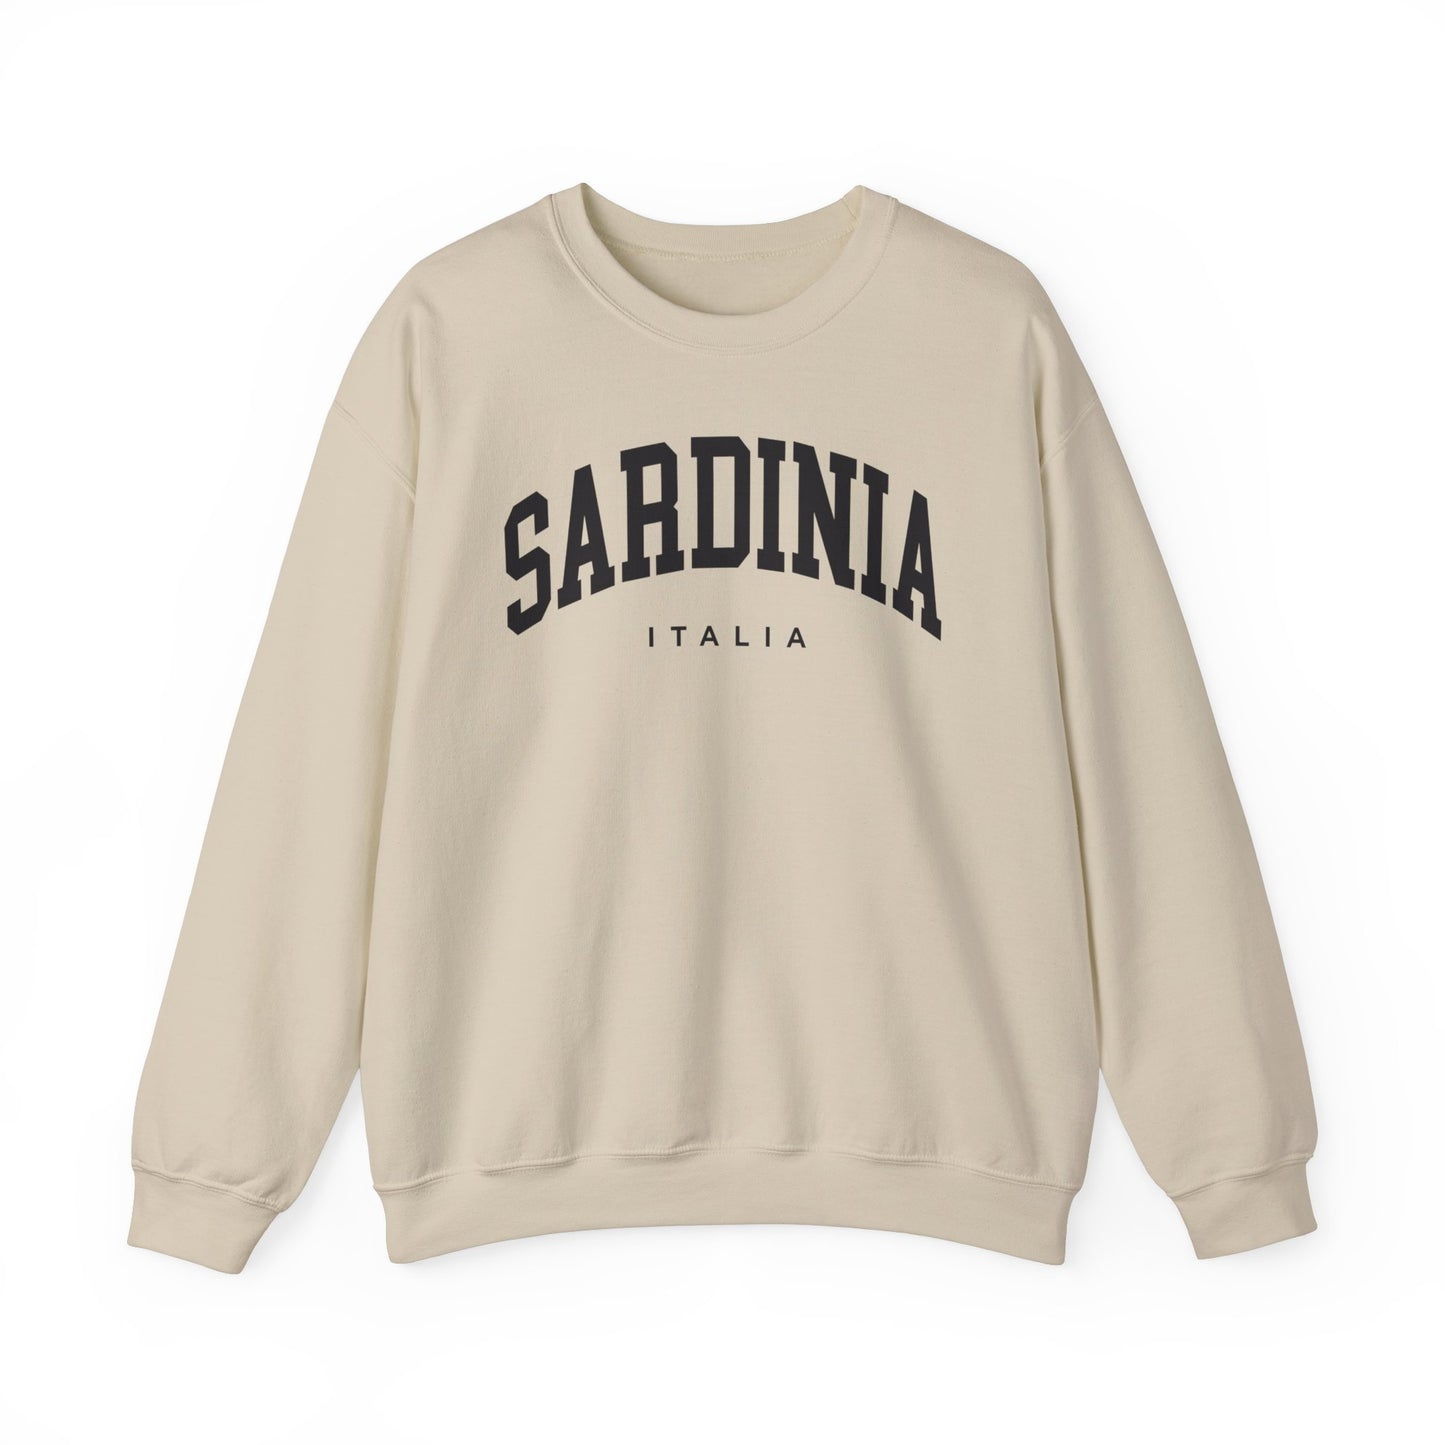 Sardinia Italy Sweatshirt